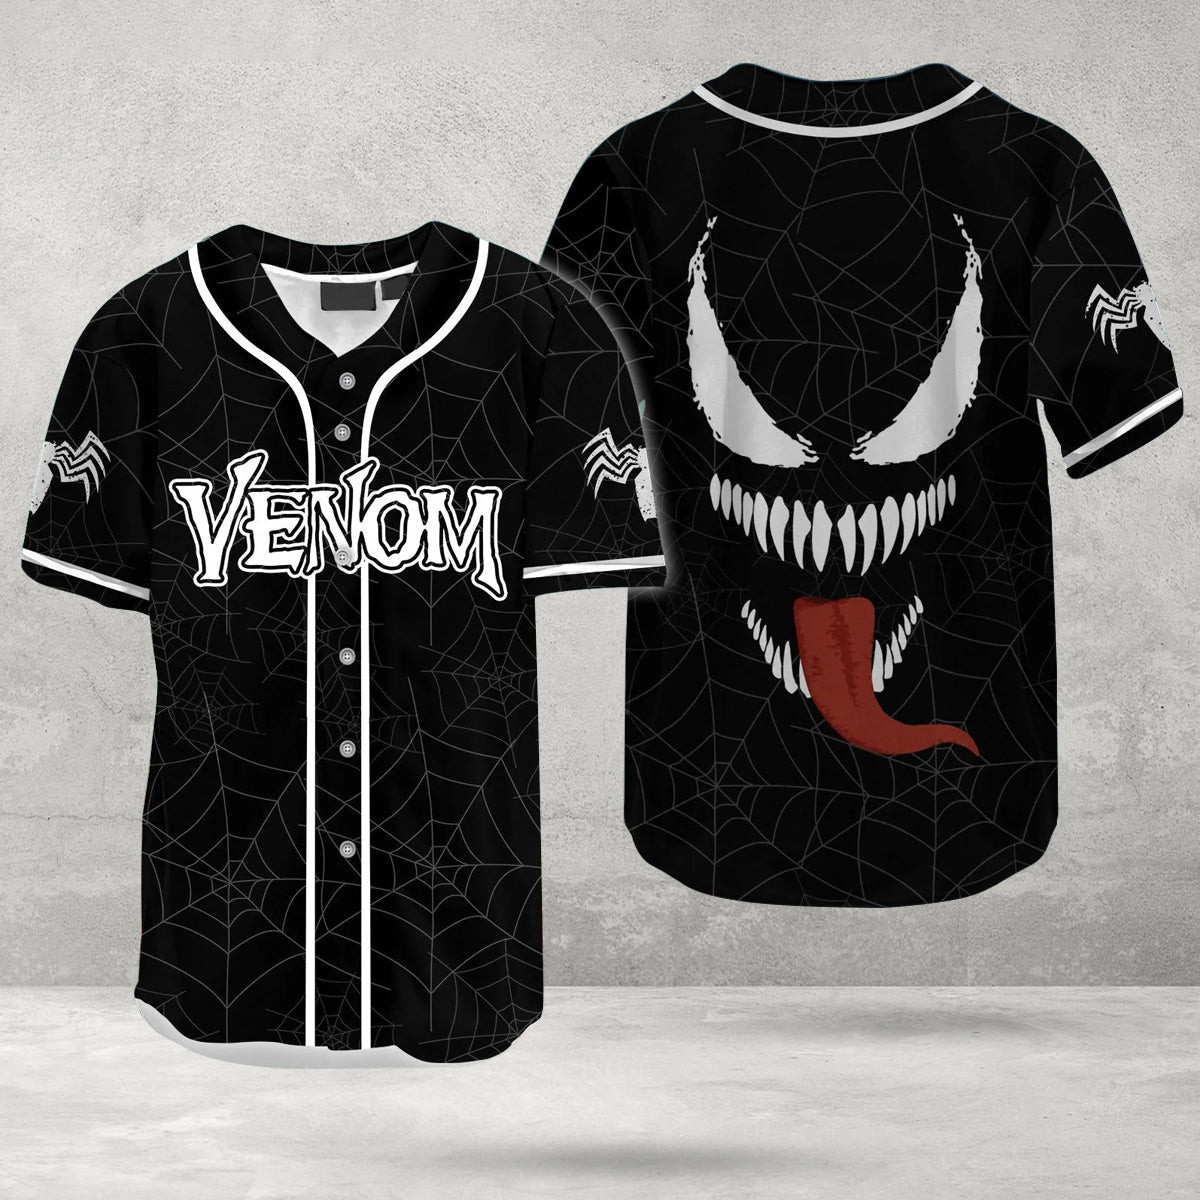 American Superhero Venom Character Jersey Shirt, Unisex Baseball Jersey for Men Women